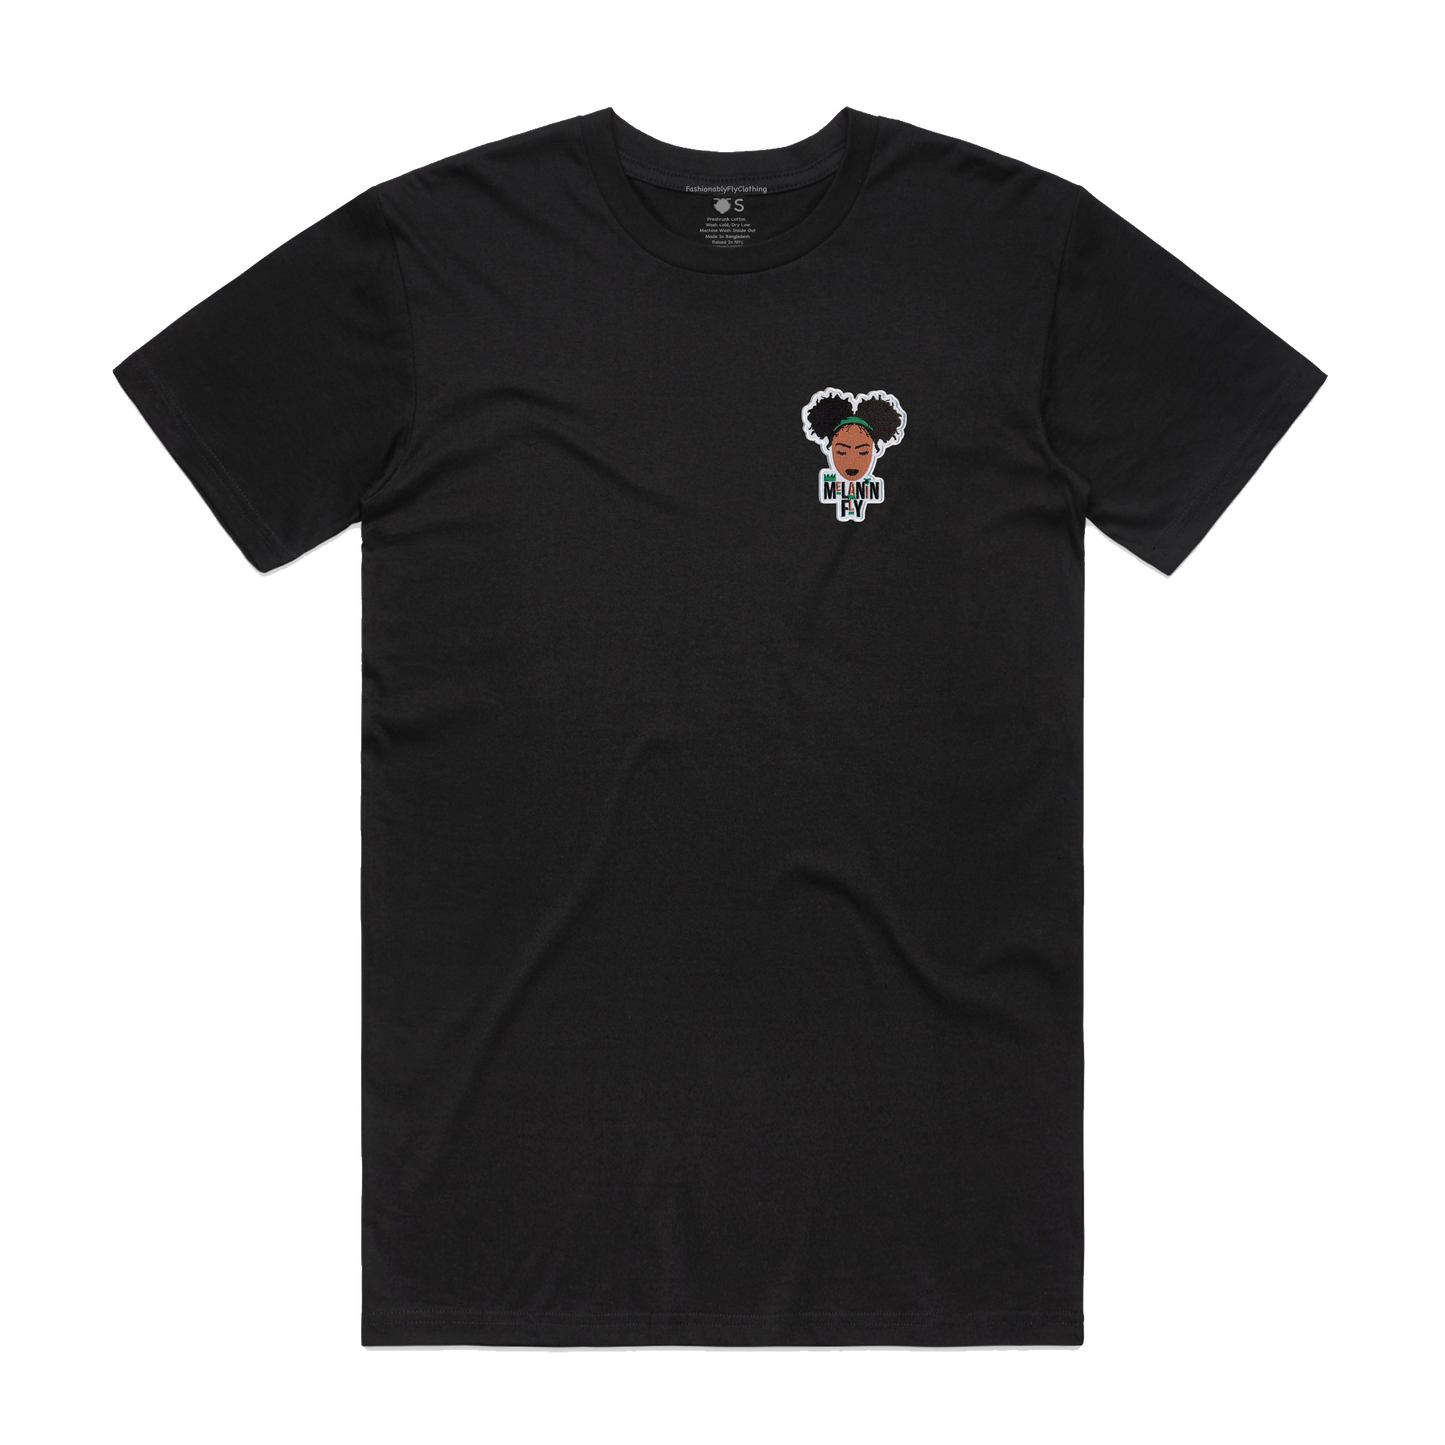 Melanin Fly Patch Unisex T-Shirt - Black